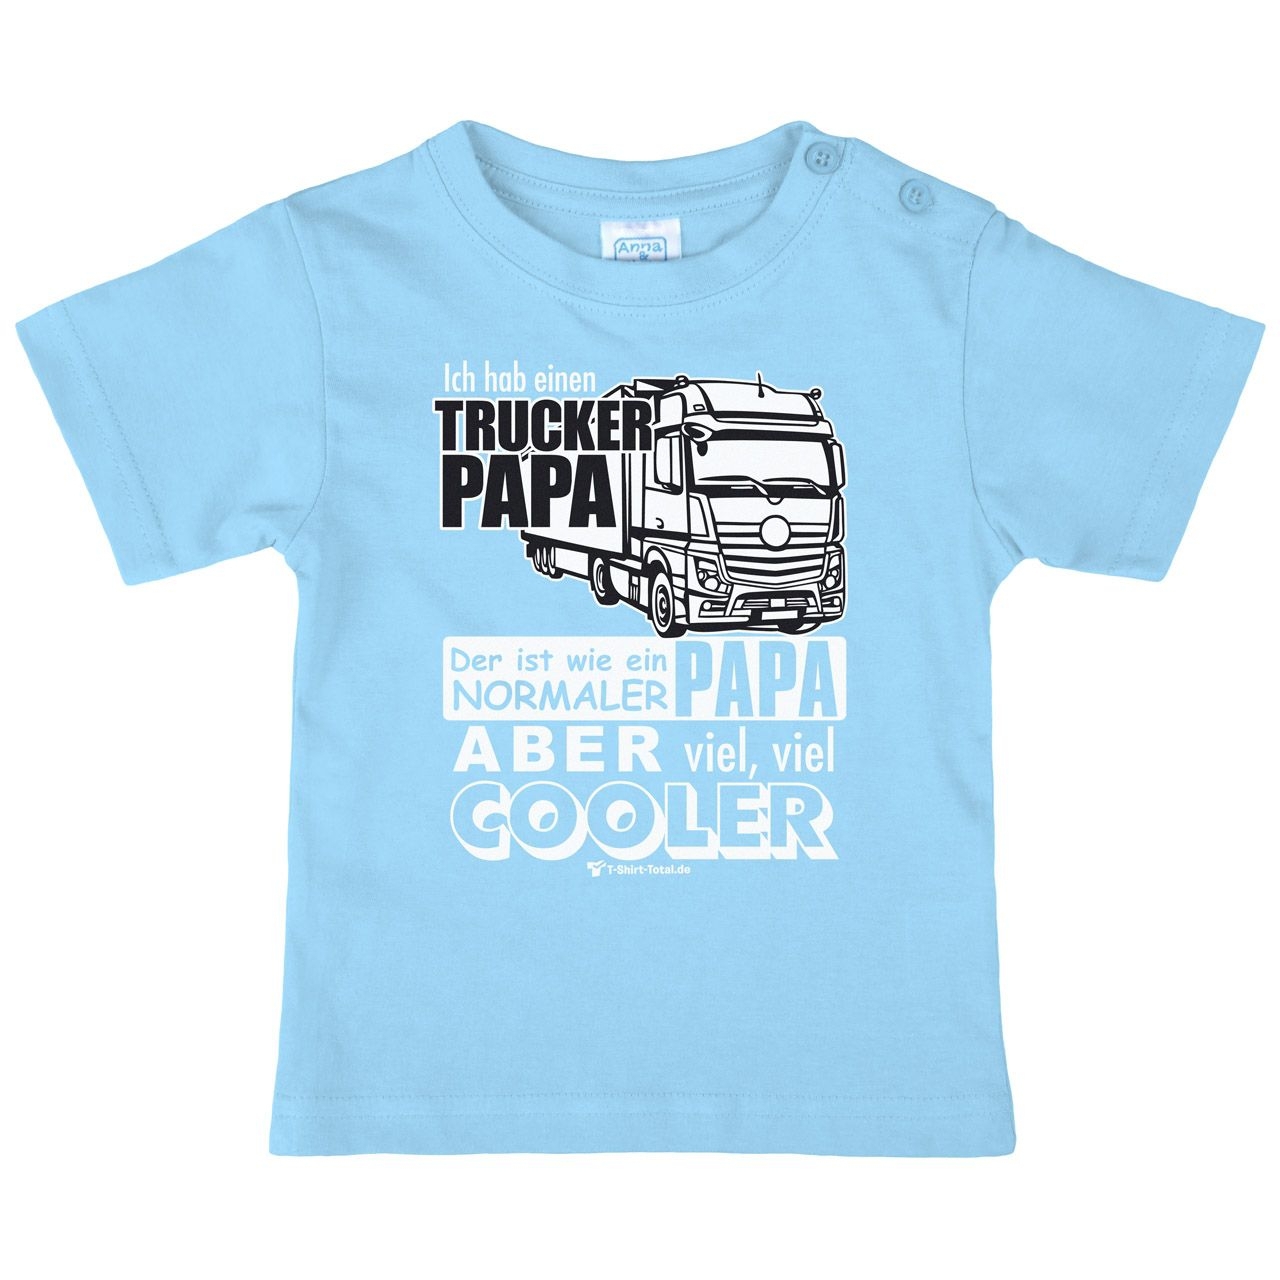 Trucker Papa Kinder T-Shirt hellblau 68 / 74